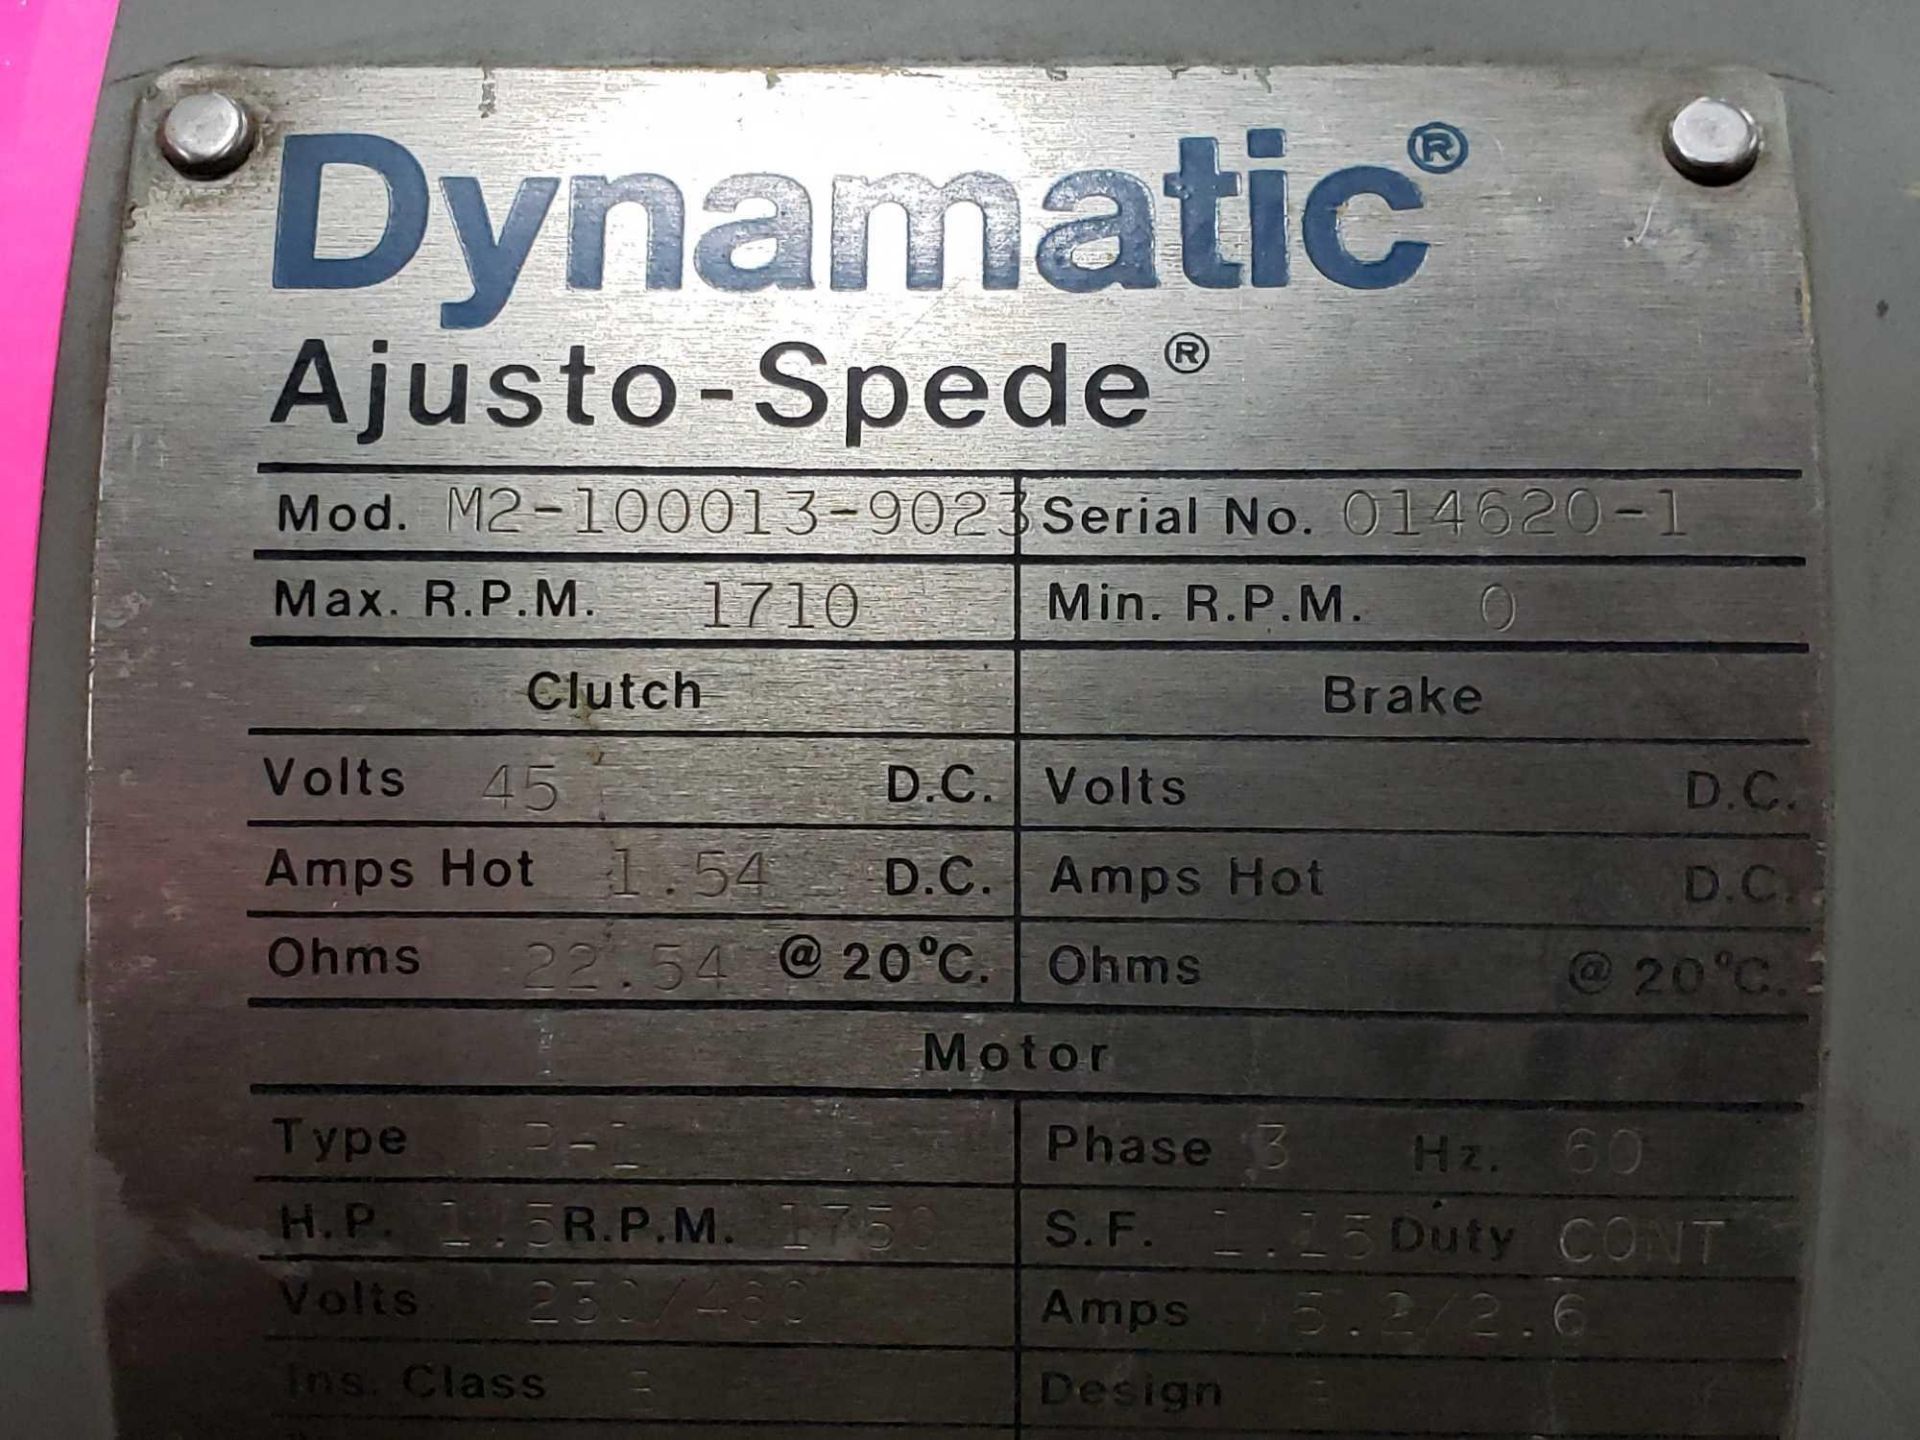 1.5ph Eaton Dynamatic adjusto-Spede motor clutch brake model M2-100013-9023, 1710rpm,230/460v. - Image 2 of 4